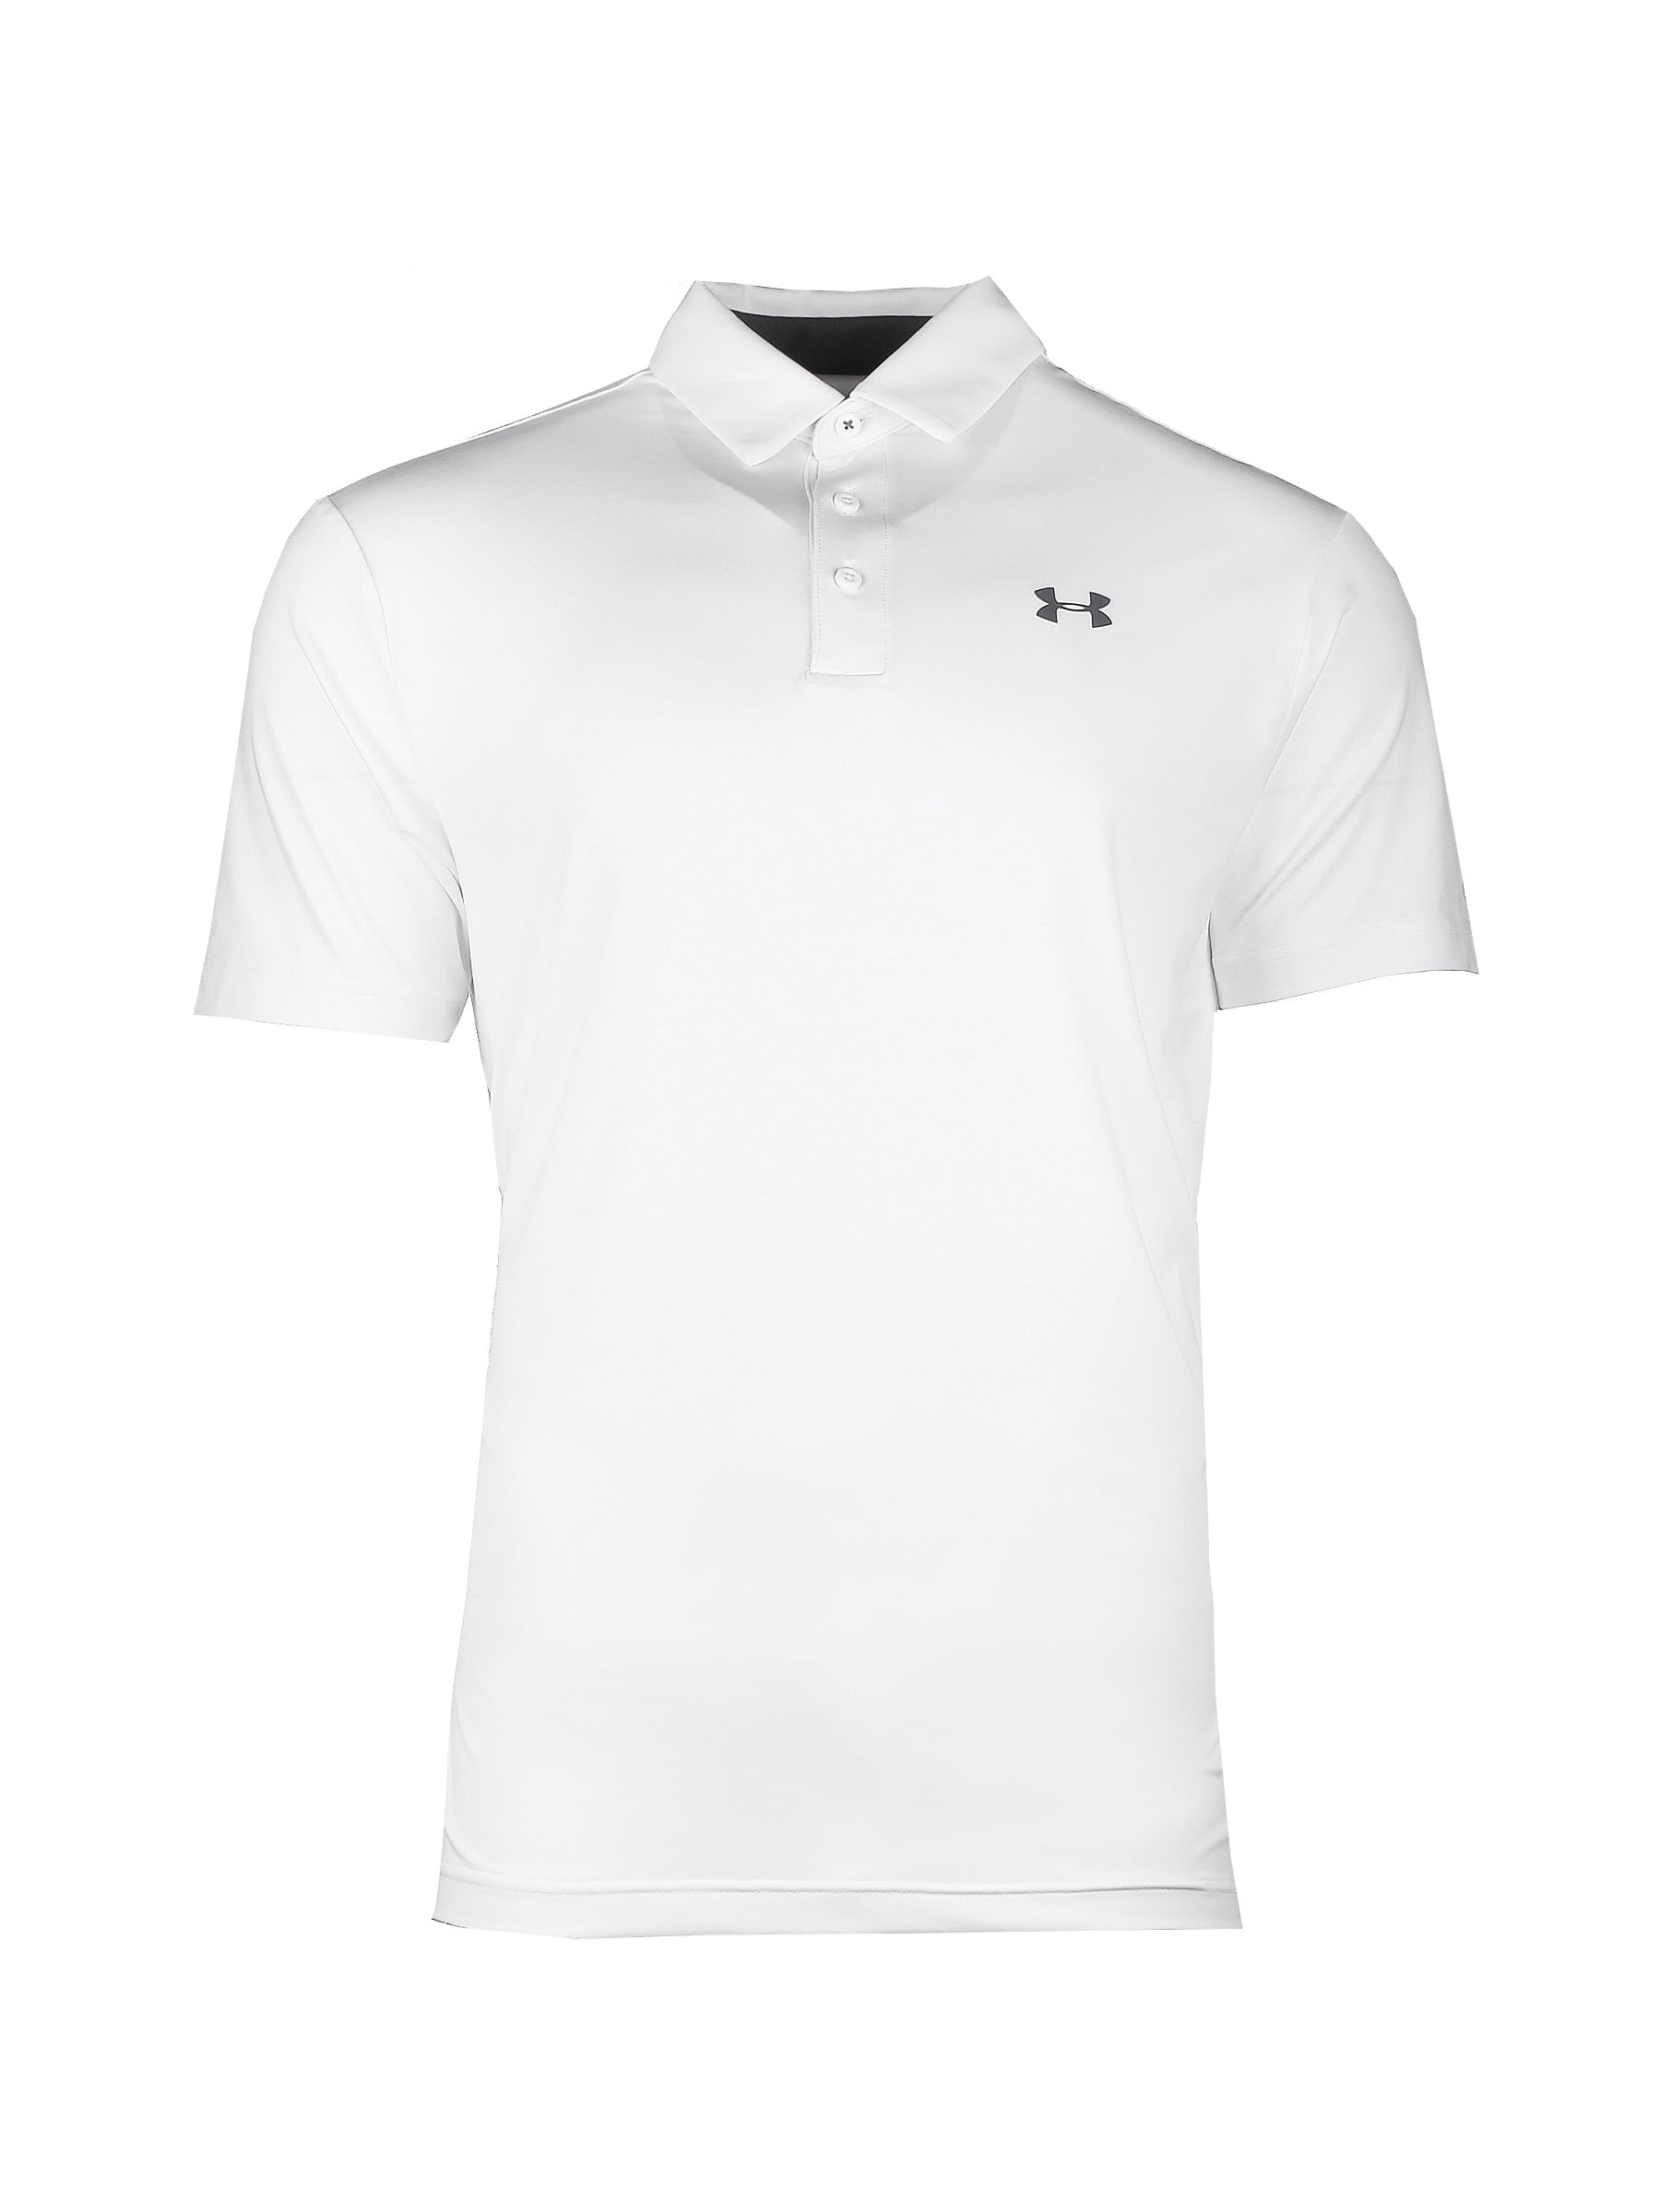 Armour Men's Polo Shirt White/Steel XL Walmart.com